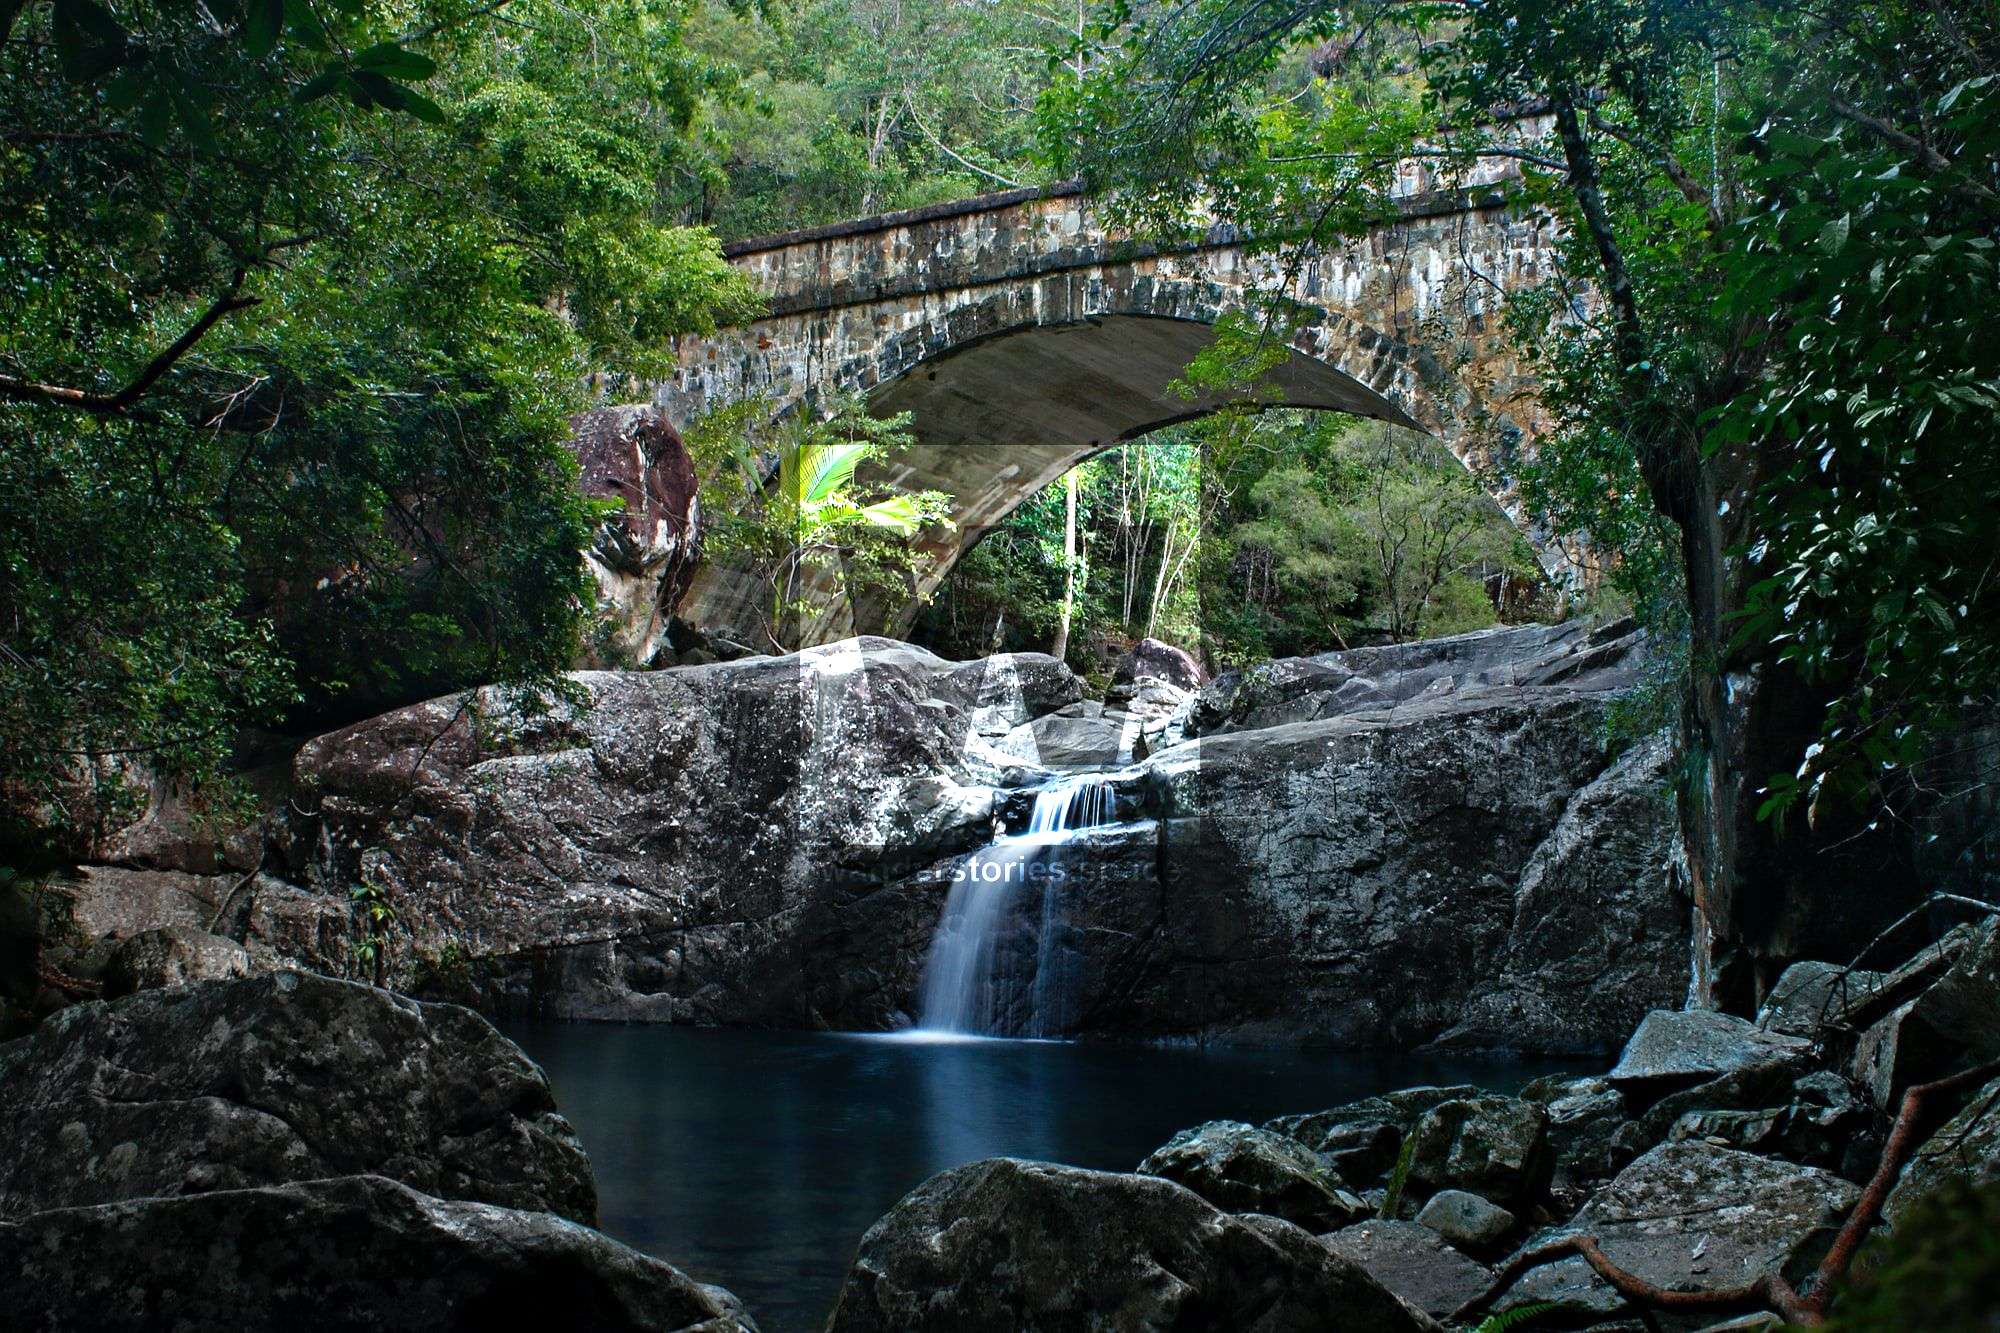 Little Crystal Creek Bridge and Swimming Area